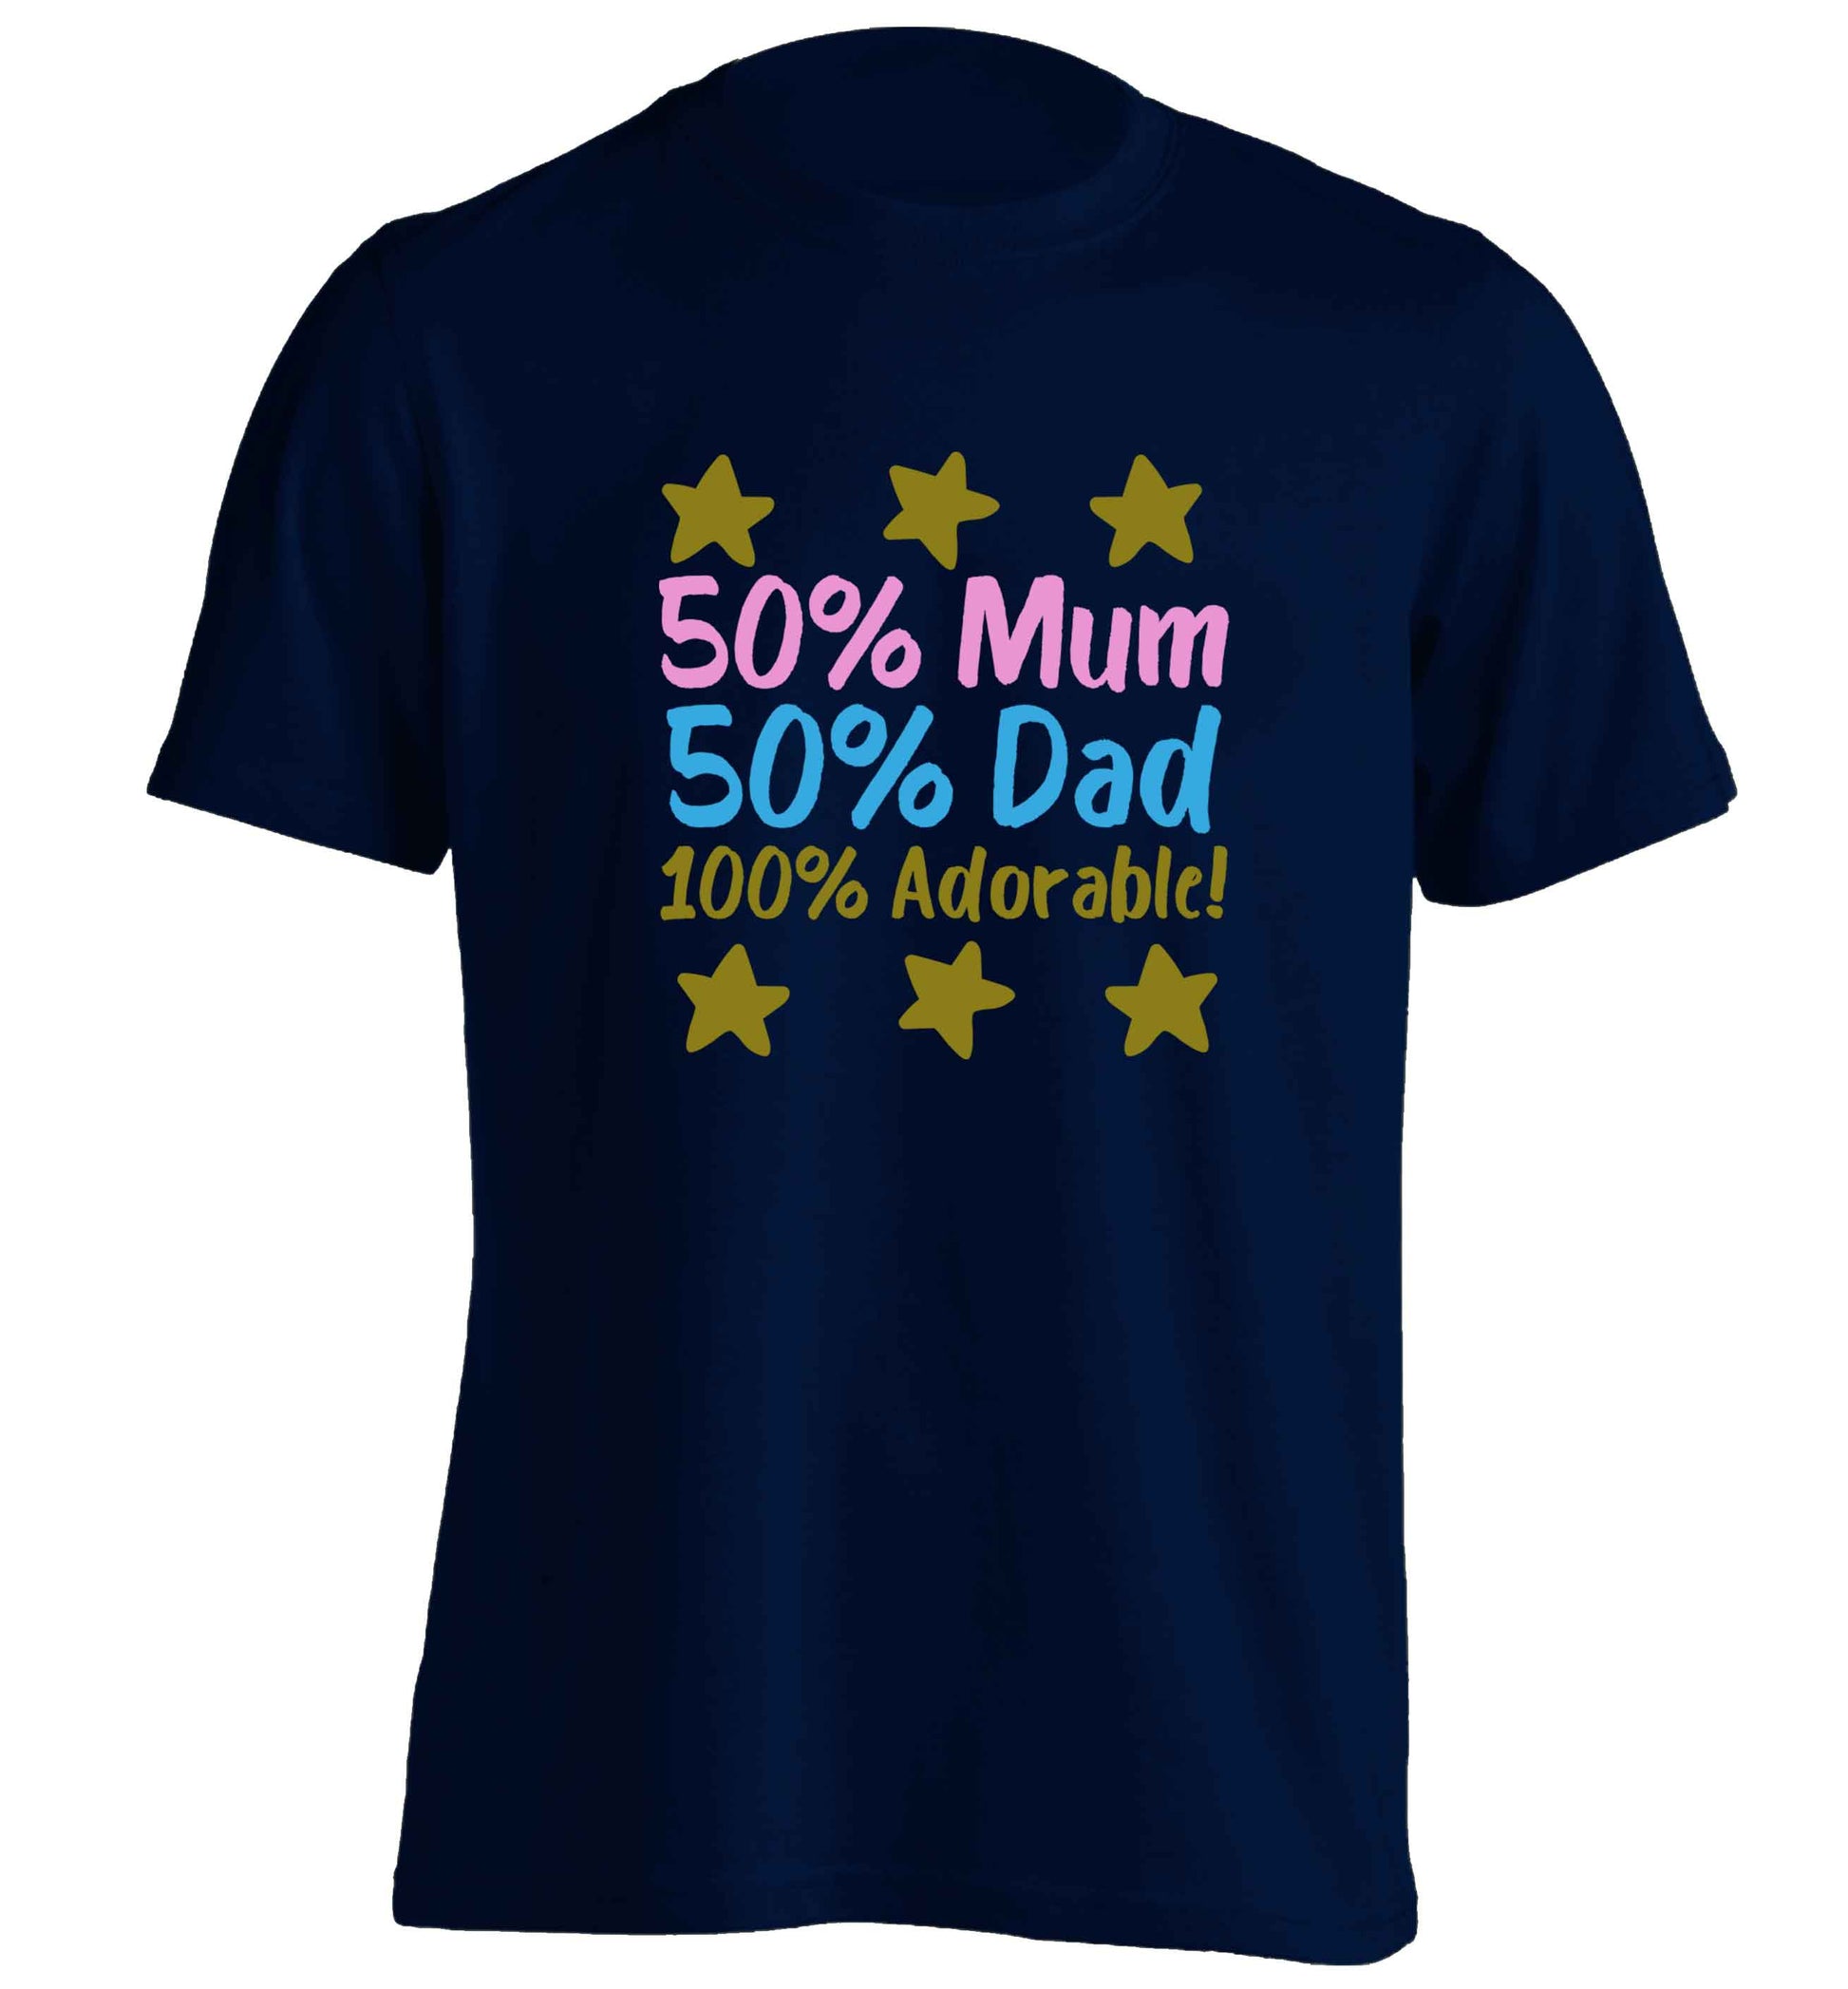 50% mum 50% dad 100% adorable adults unisex navy Tshirt 2XL